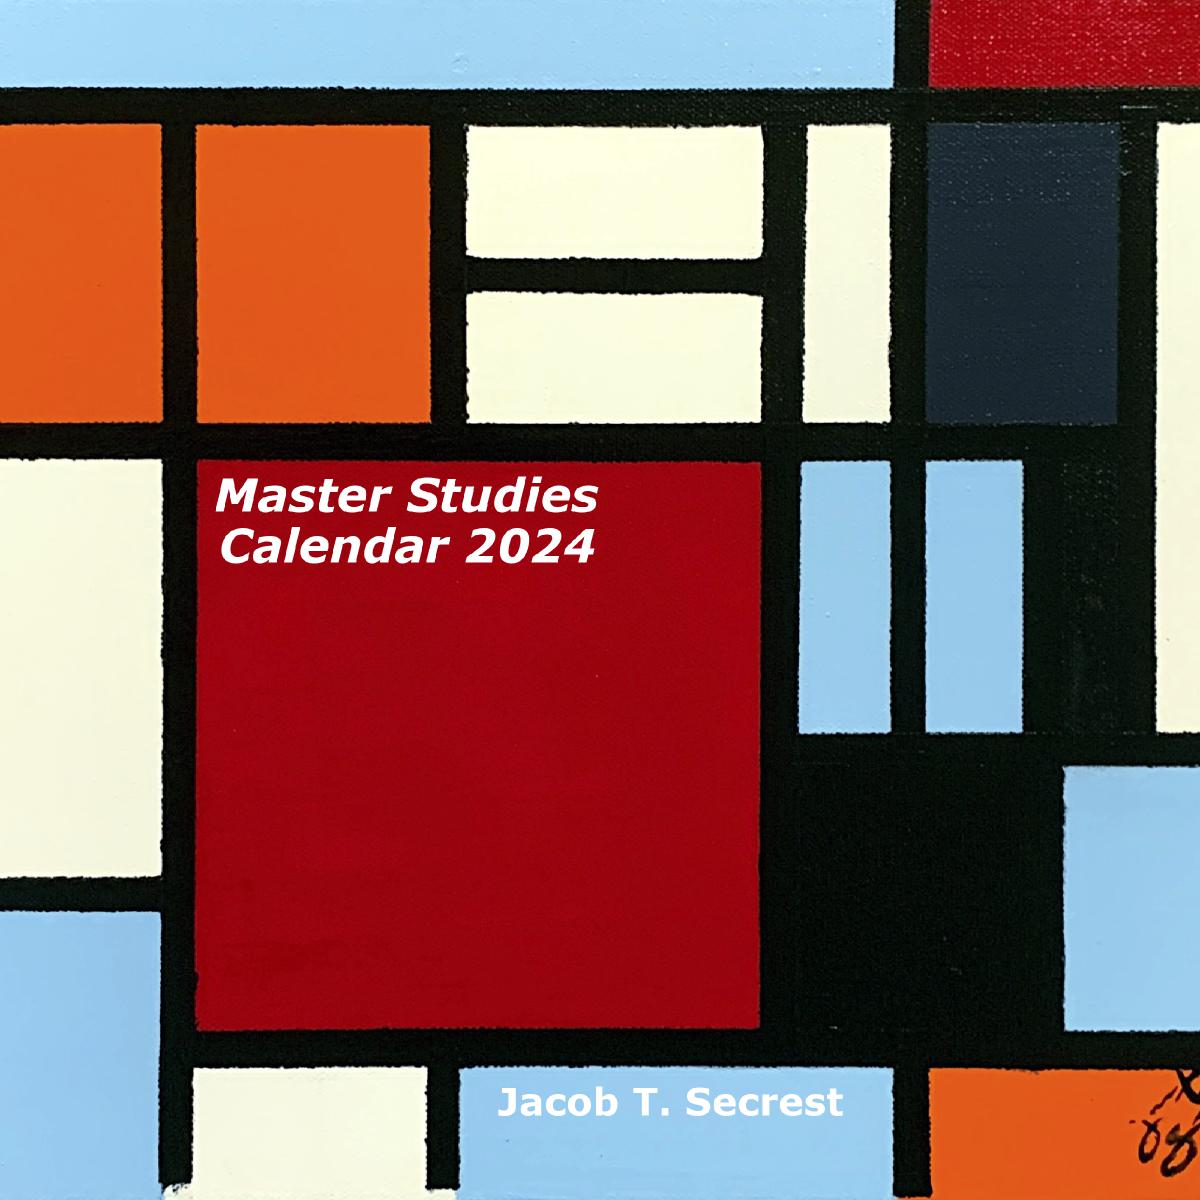 Master Studies Calendar 2024 by Jacob Secrest